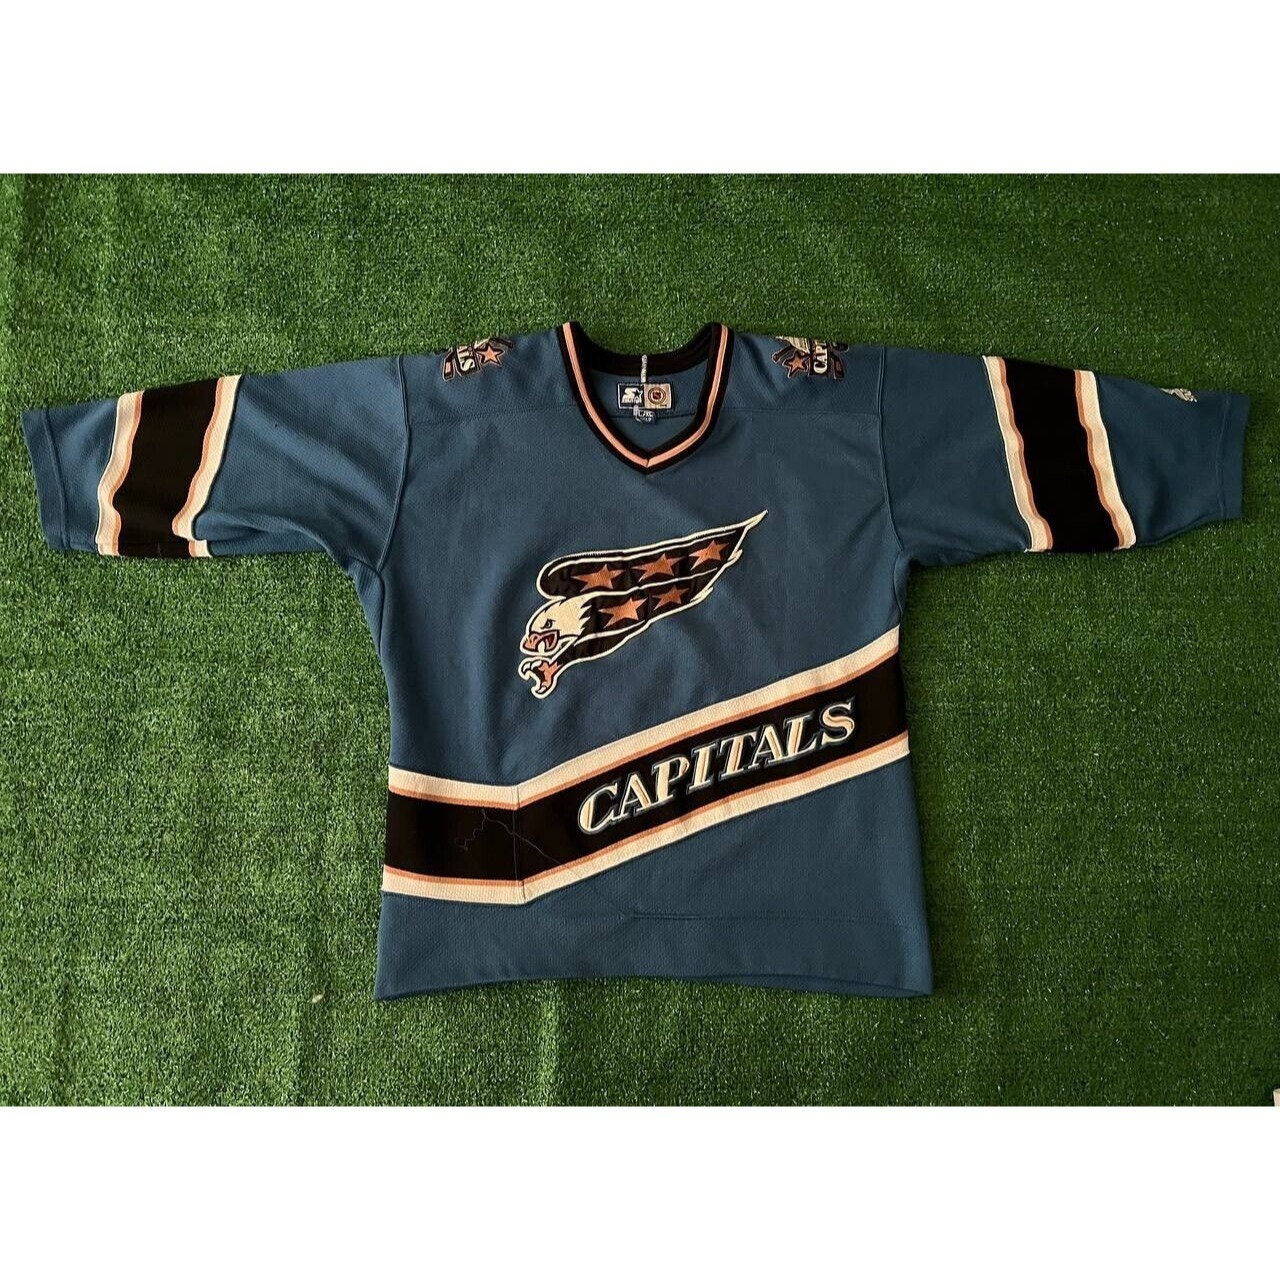 deadmansupplyco Vintage Hockey - Washington Capitals (White Capitals Wordmark) Long Sleeve T-Shirt